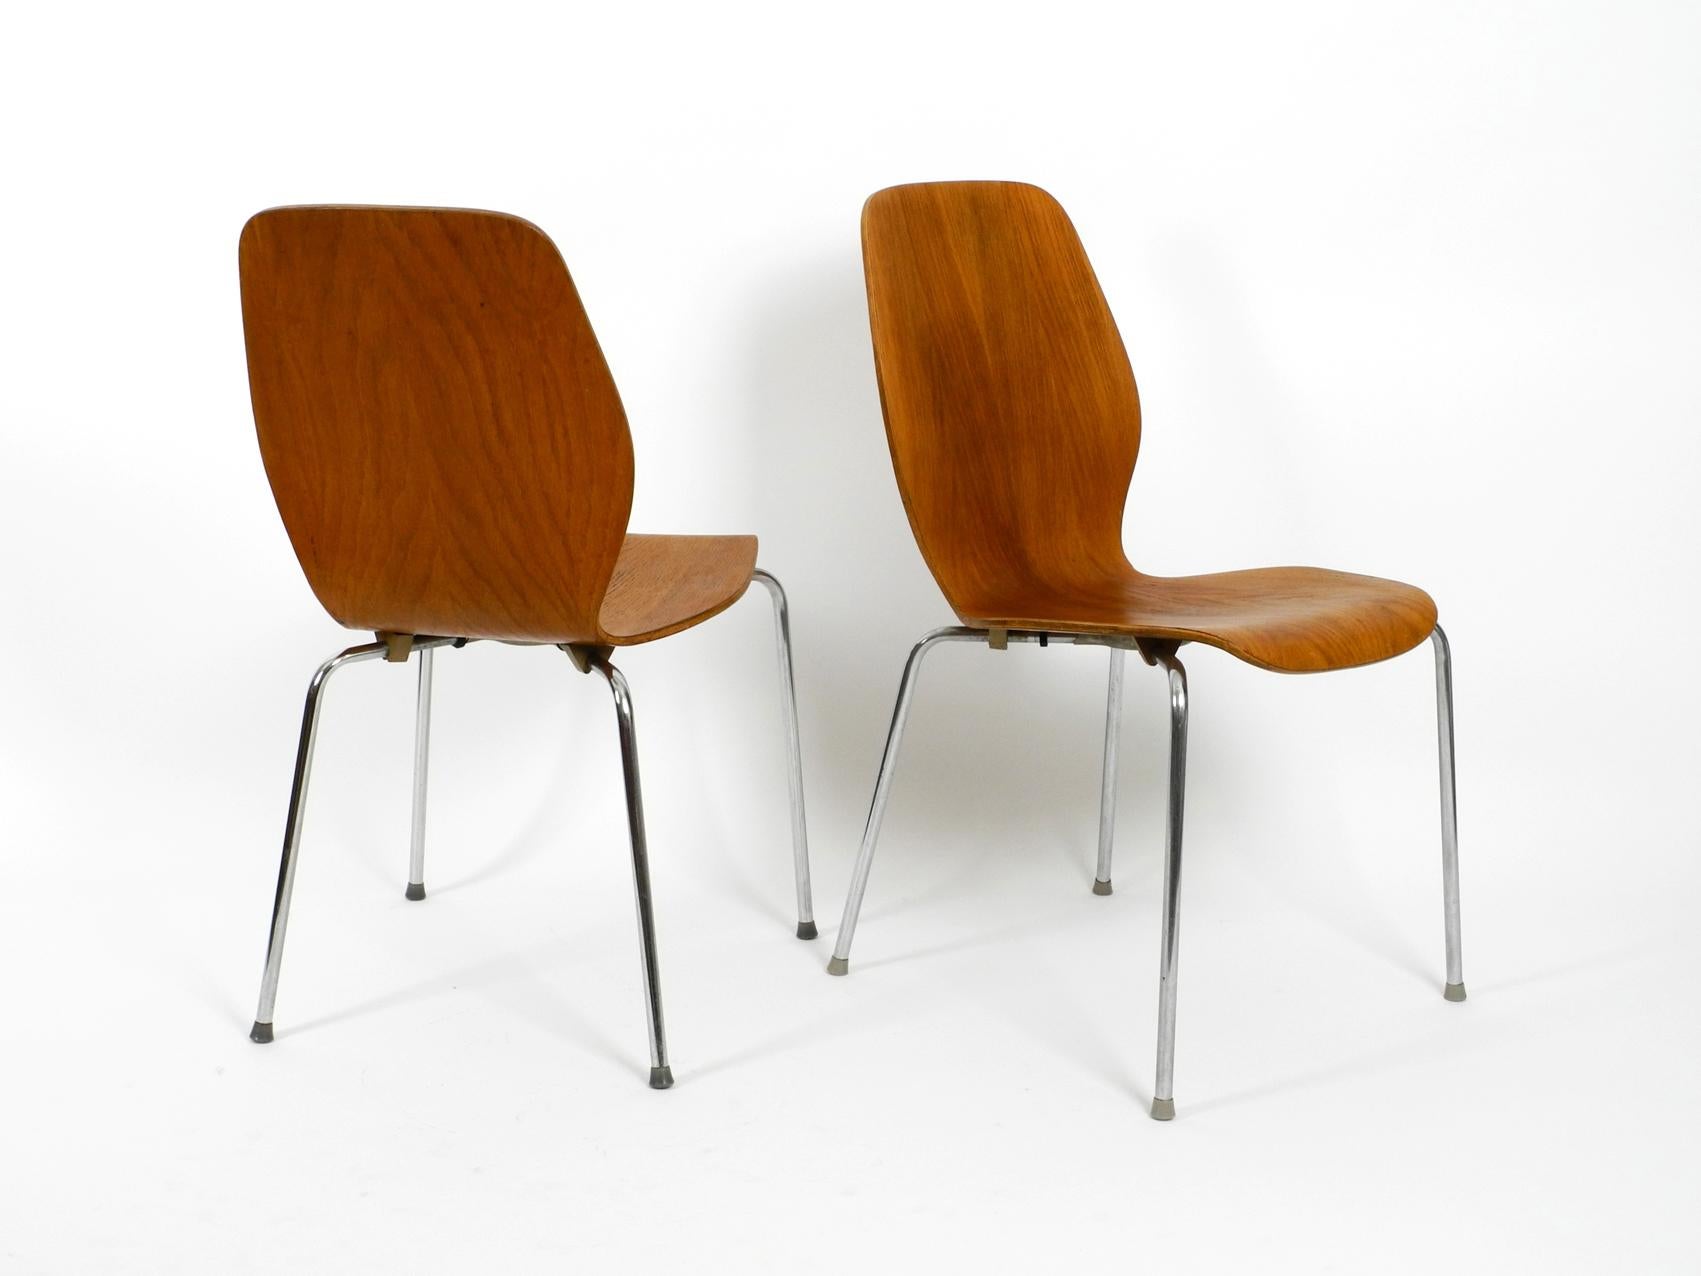 Danish Set of 6 teak plywood chairs by Herbert Hirche for Jofa Stalmobler Denmark